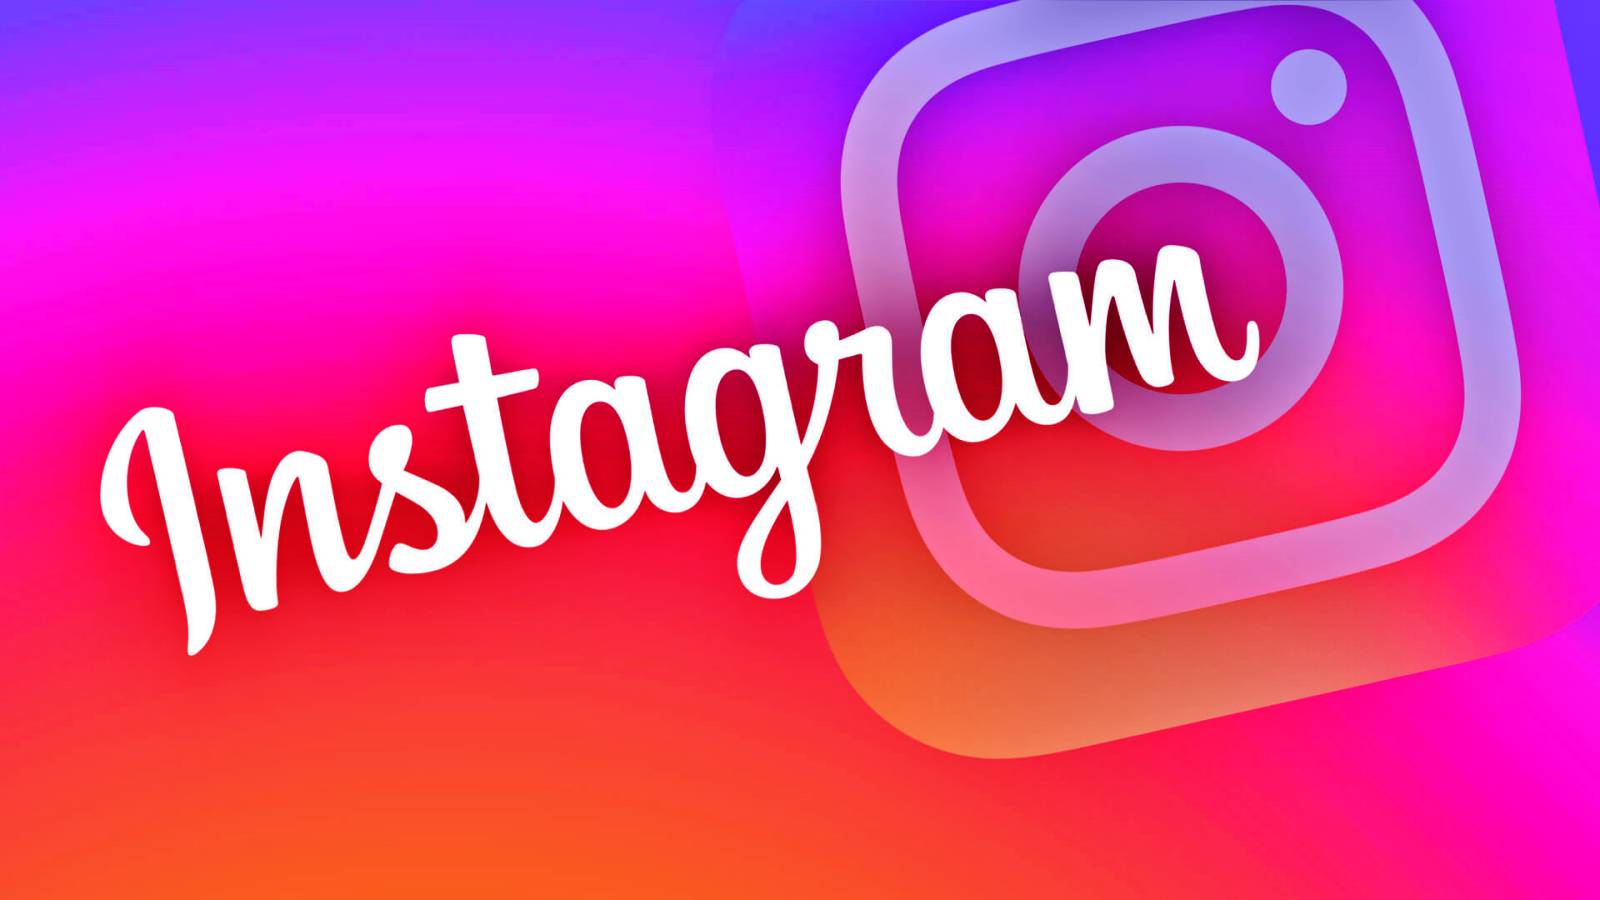 Instagram Update a fost Lansat, ce Schimbari sunt Acum Oferite in Telefoane